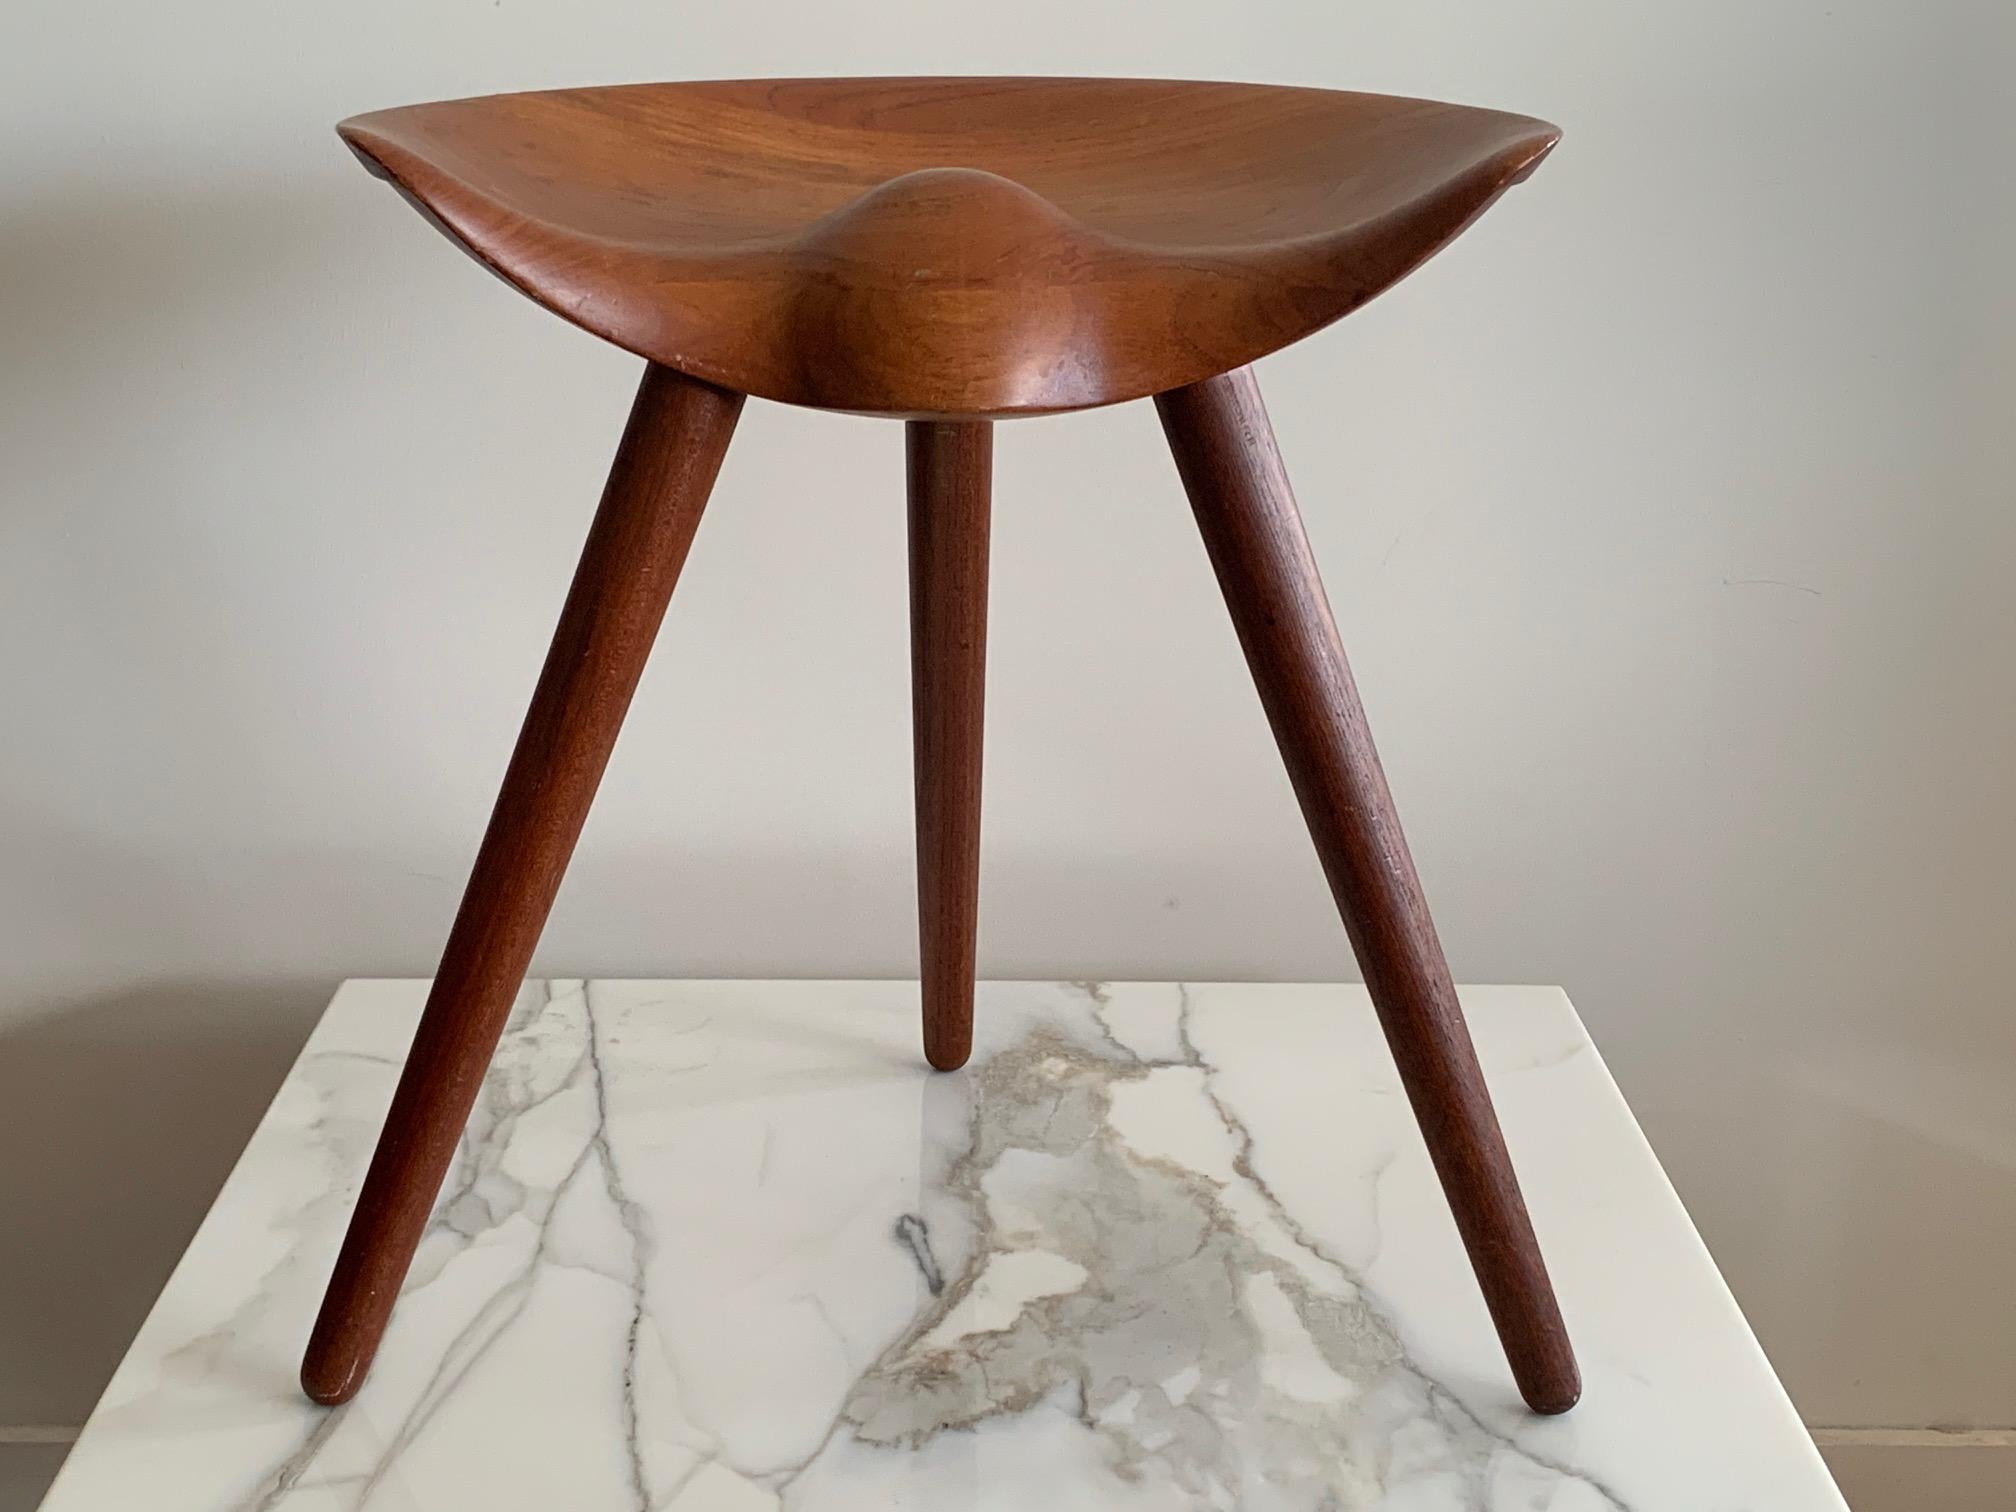 A classic vintage and original Mogens Lassen three legged stool in teak. Beautiful patina, great sculptural form.